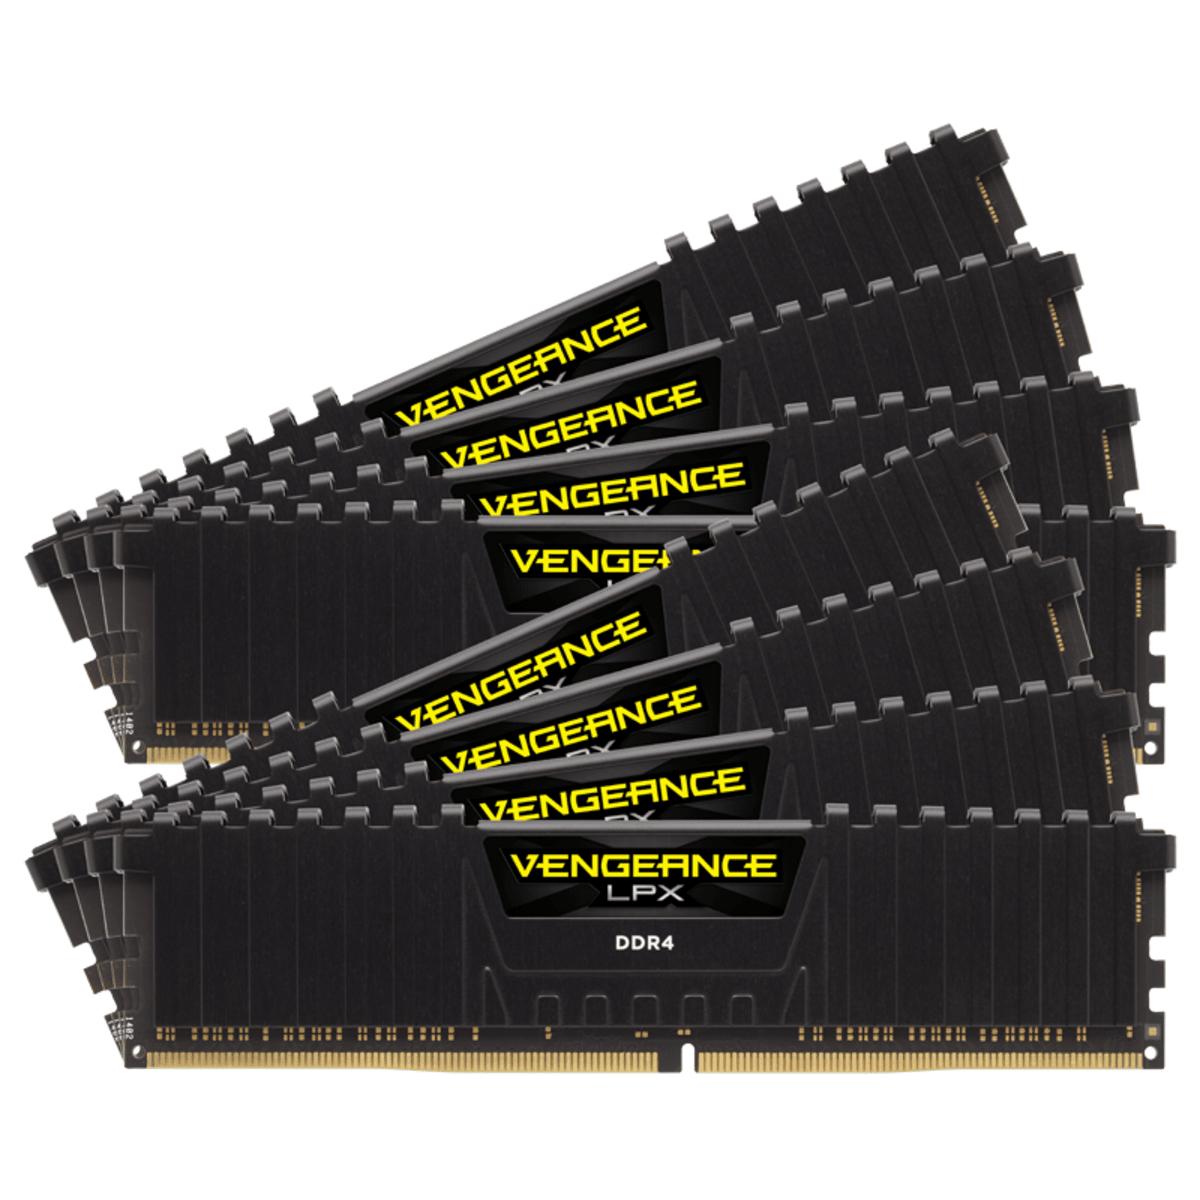 DDR4 256 bk 8x32GB,1,35V,VengLPX CORSAIR Speicher-Kit GB